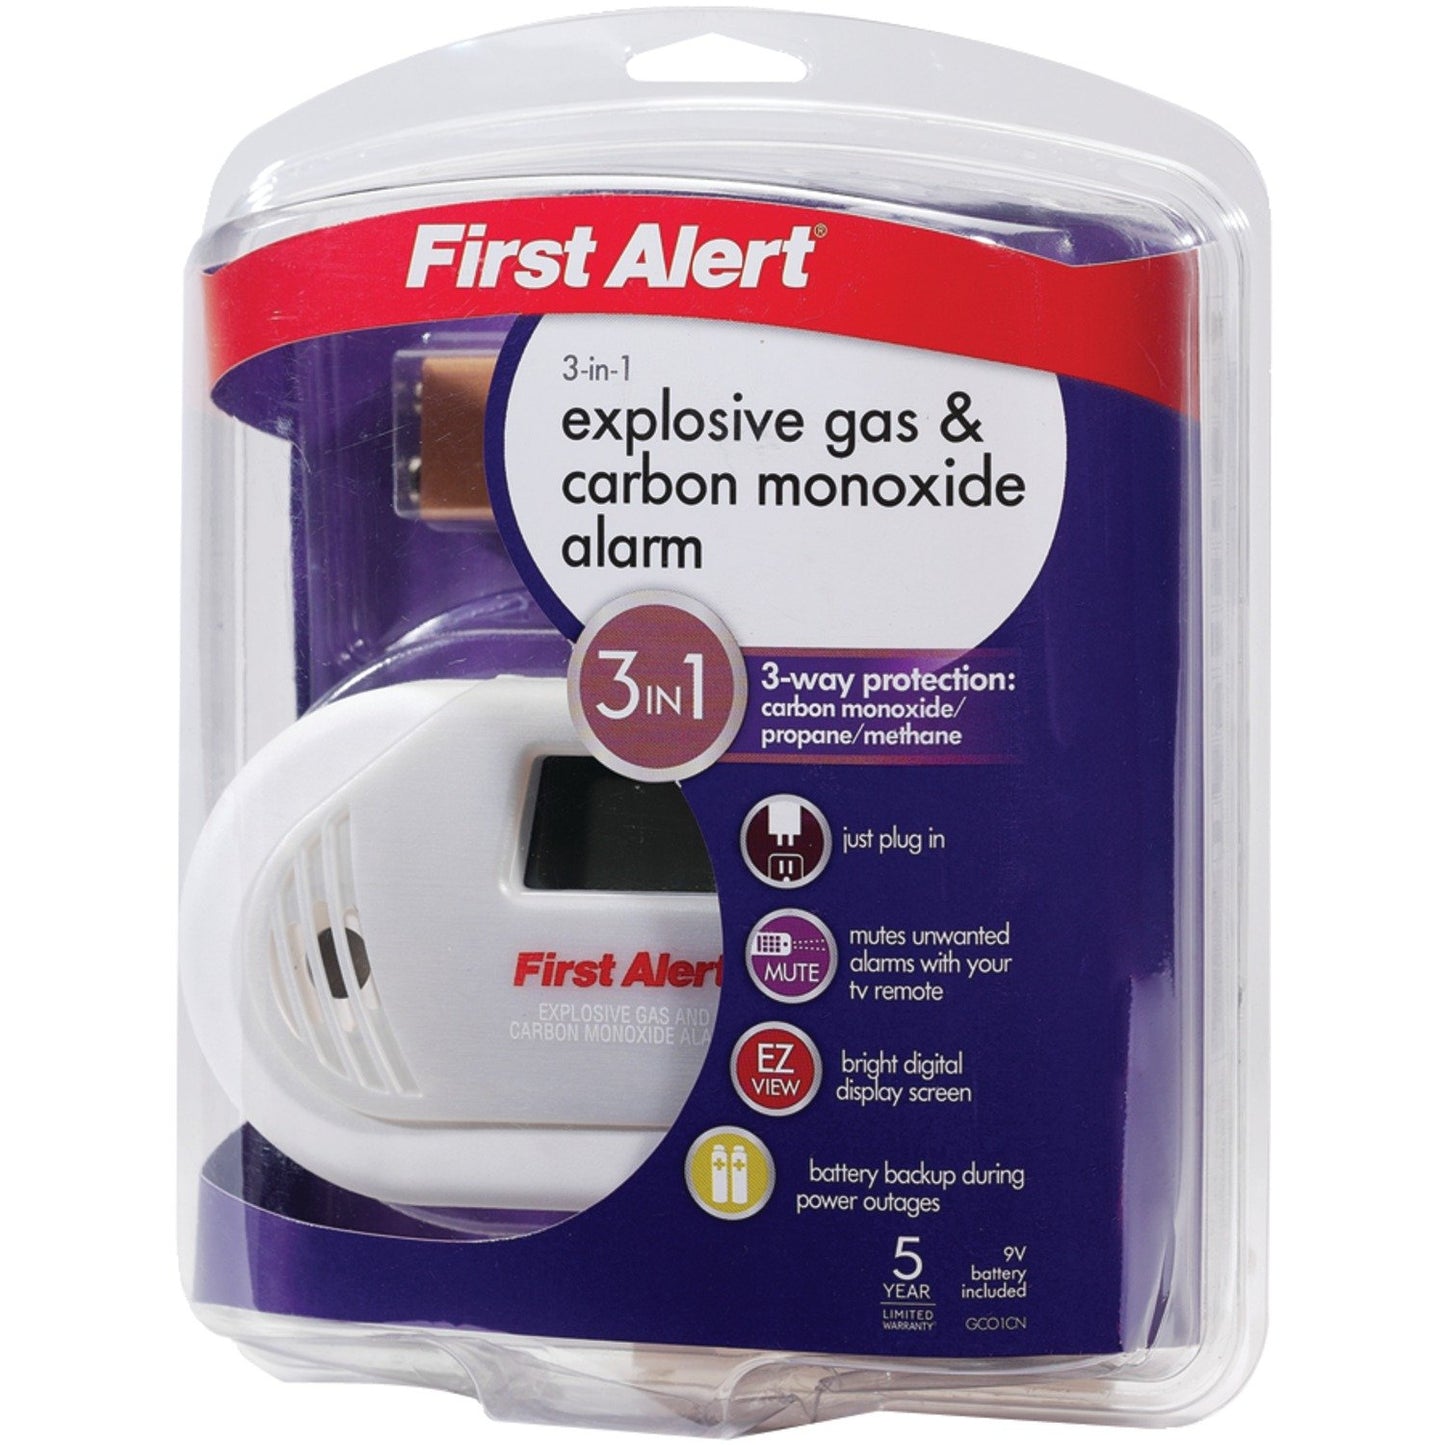 First Alert 1039760 GC01CN 3-in-1 Explosive Gas & Carbon Monoxide Alarm